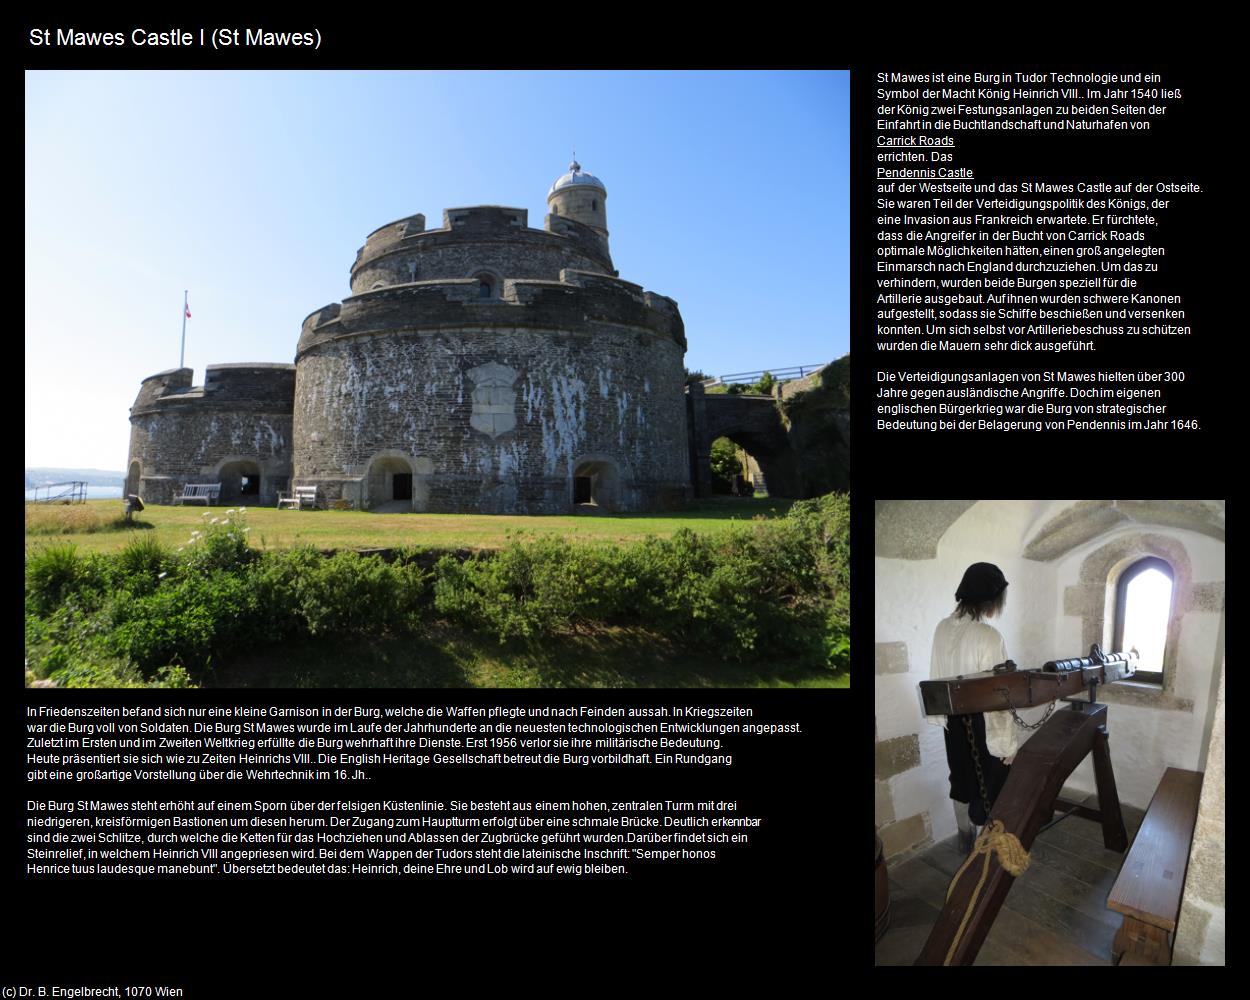 St Mawes Castle I (Saint Mawes, England) in Kulturatlas-ENGLAND und WALES(c)B.Engelbrecht